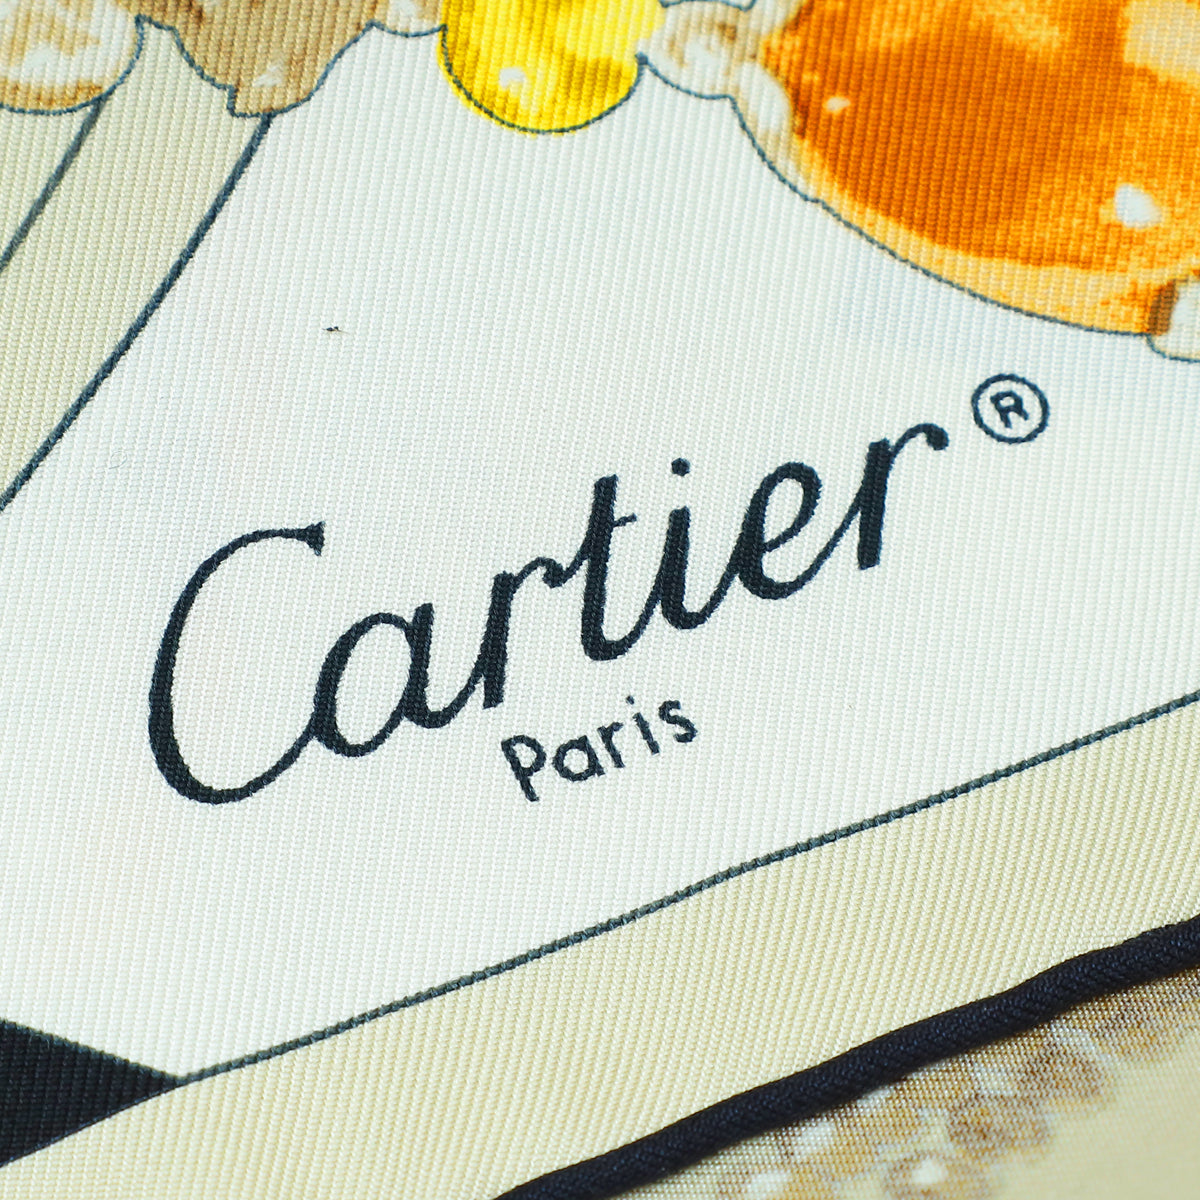 Cartier Multicolor Paris London New York Print Jewelry Print Silk Scarf